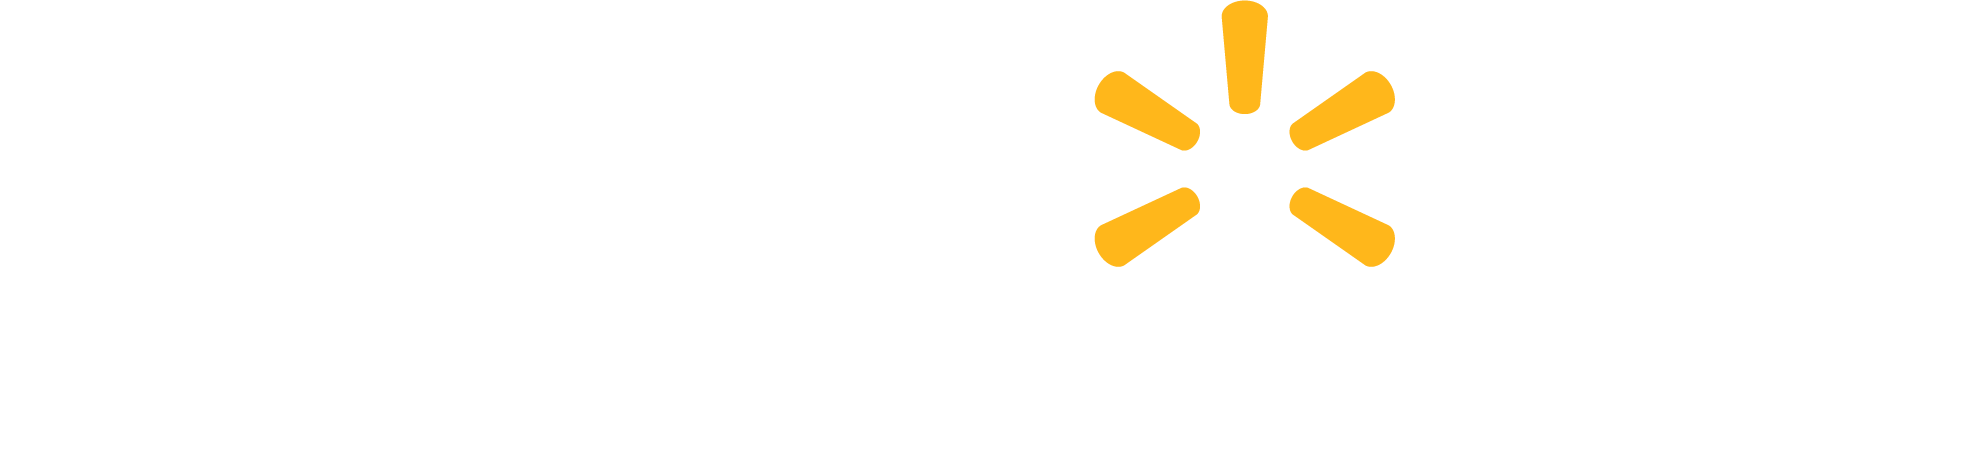 Walmart Dot Com Logo - Walmart 7 18 Campaign